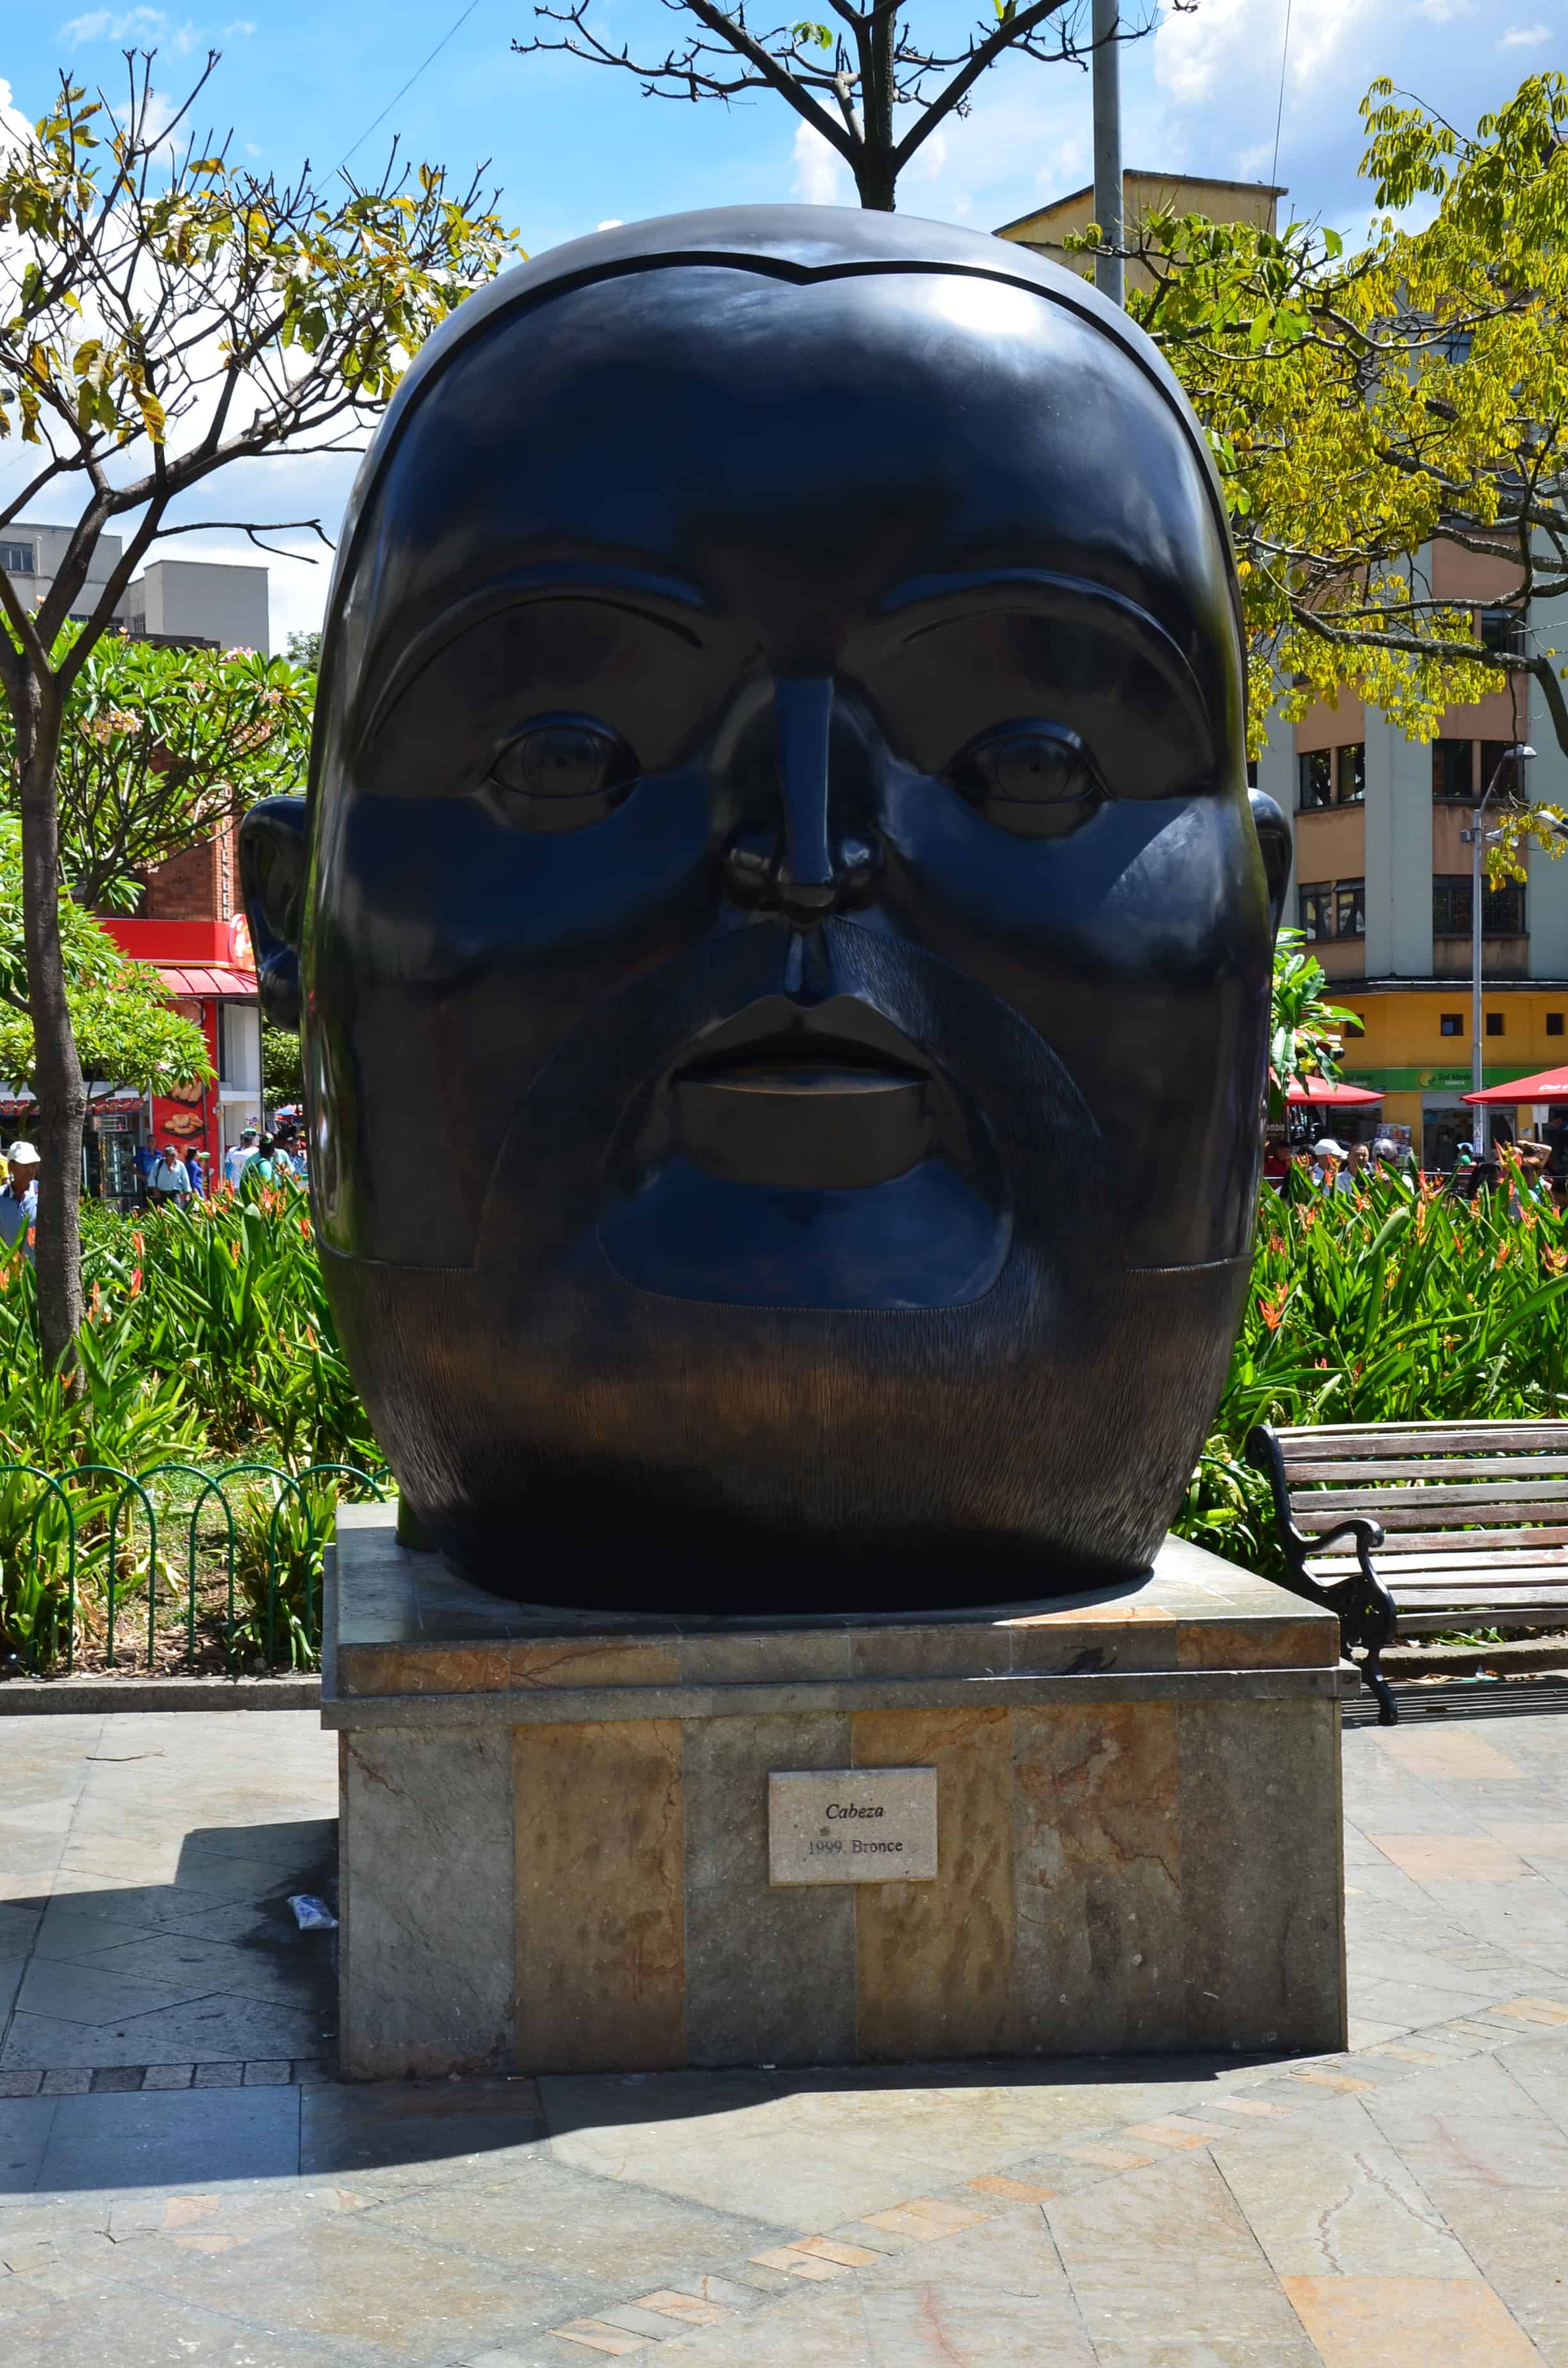 Cabeza (Head) at Plaza Botero in Medellín, Antioquia, Colombia